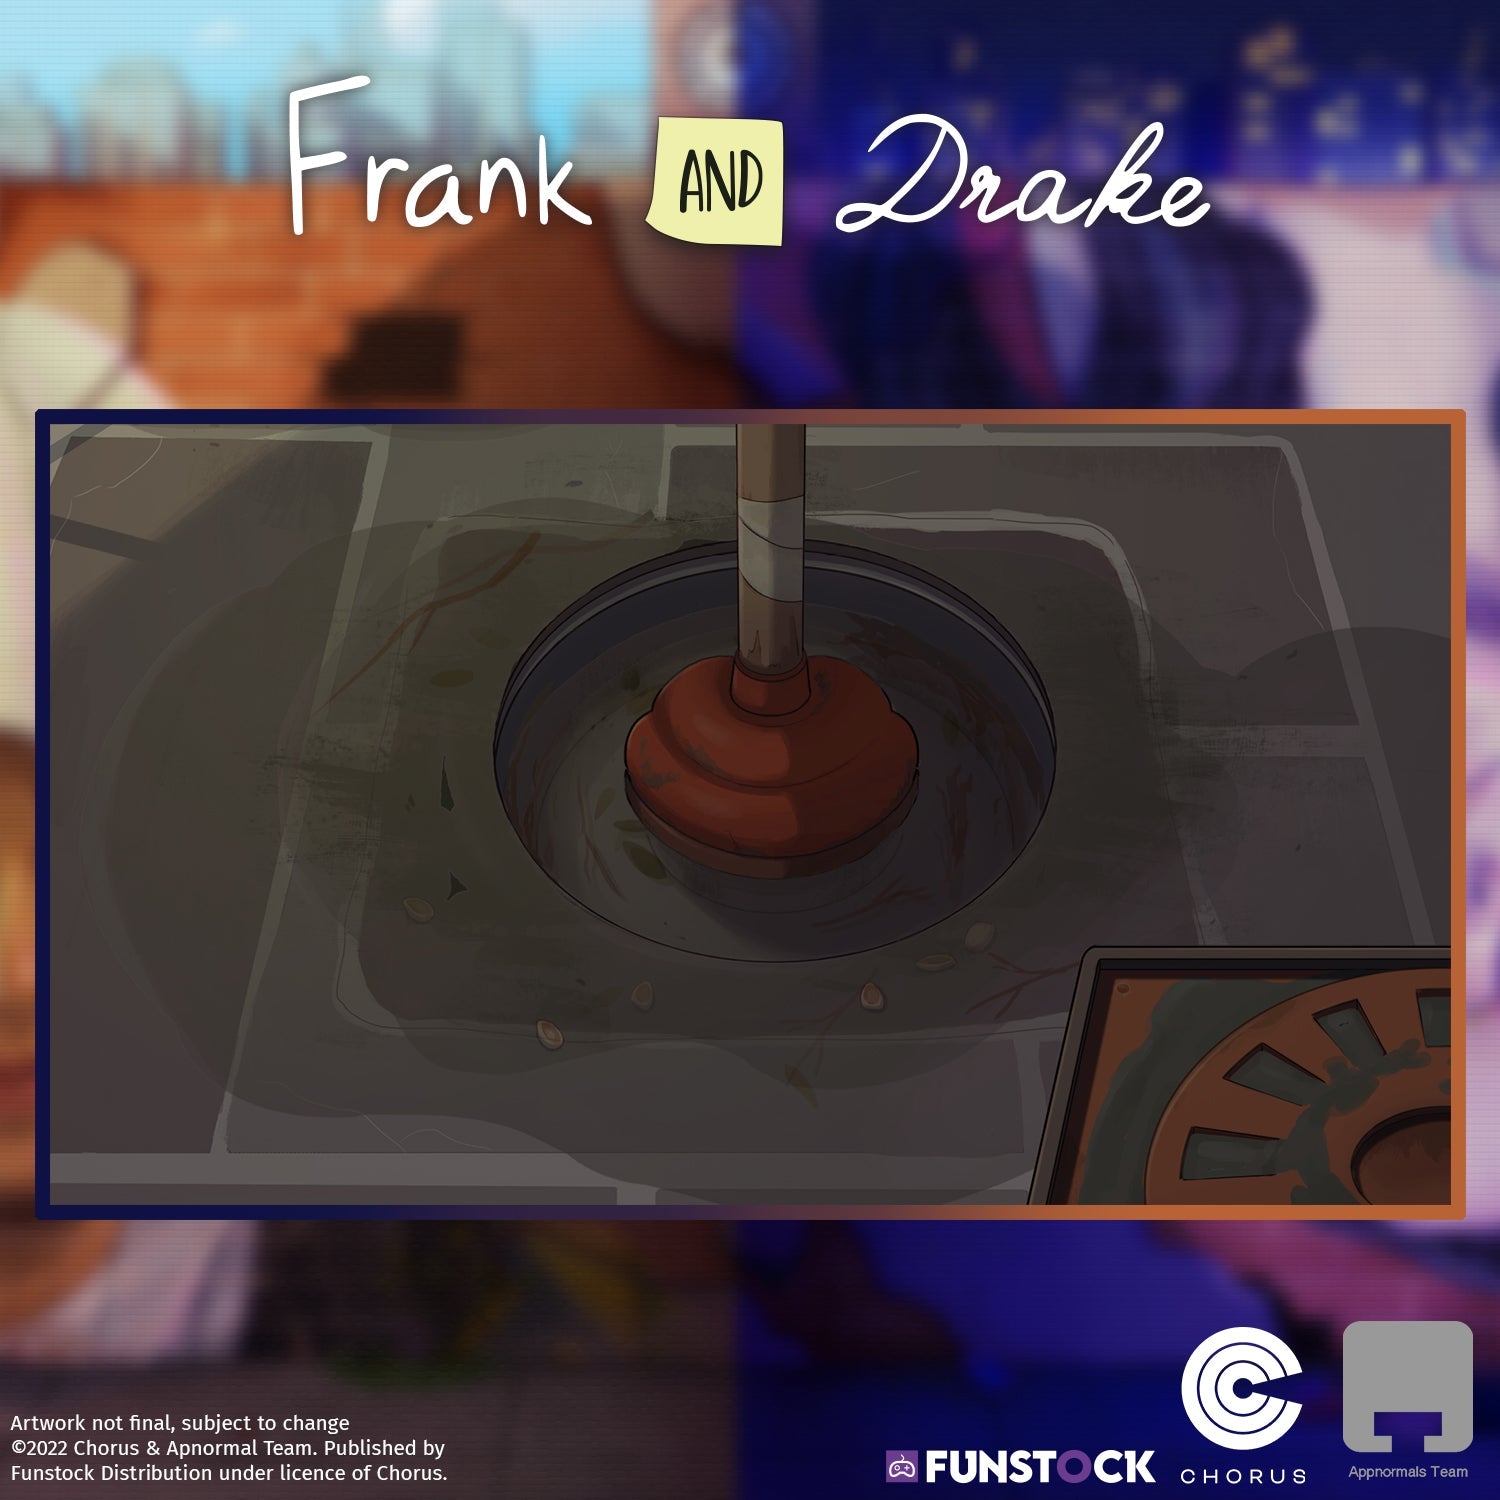 Frank and Drake (Nintendo Switch)